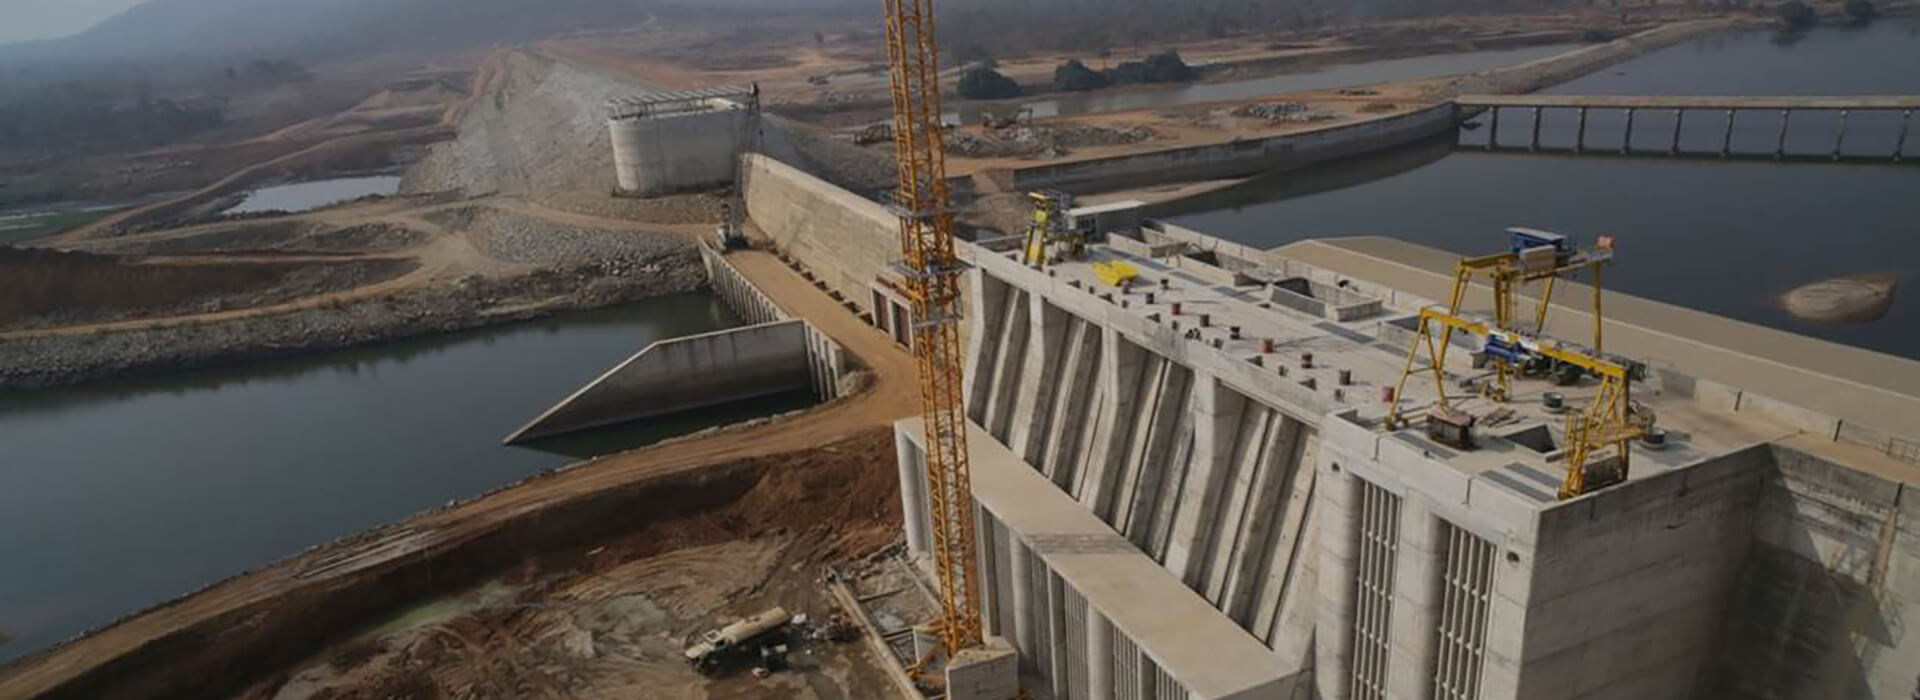 Kashambila Dam during construction